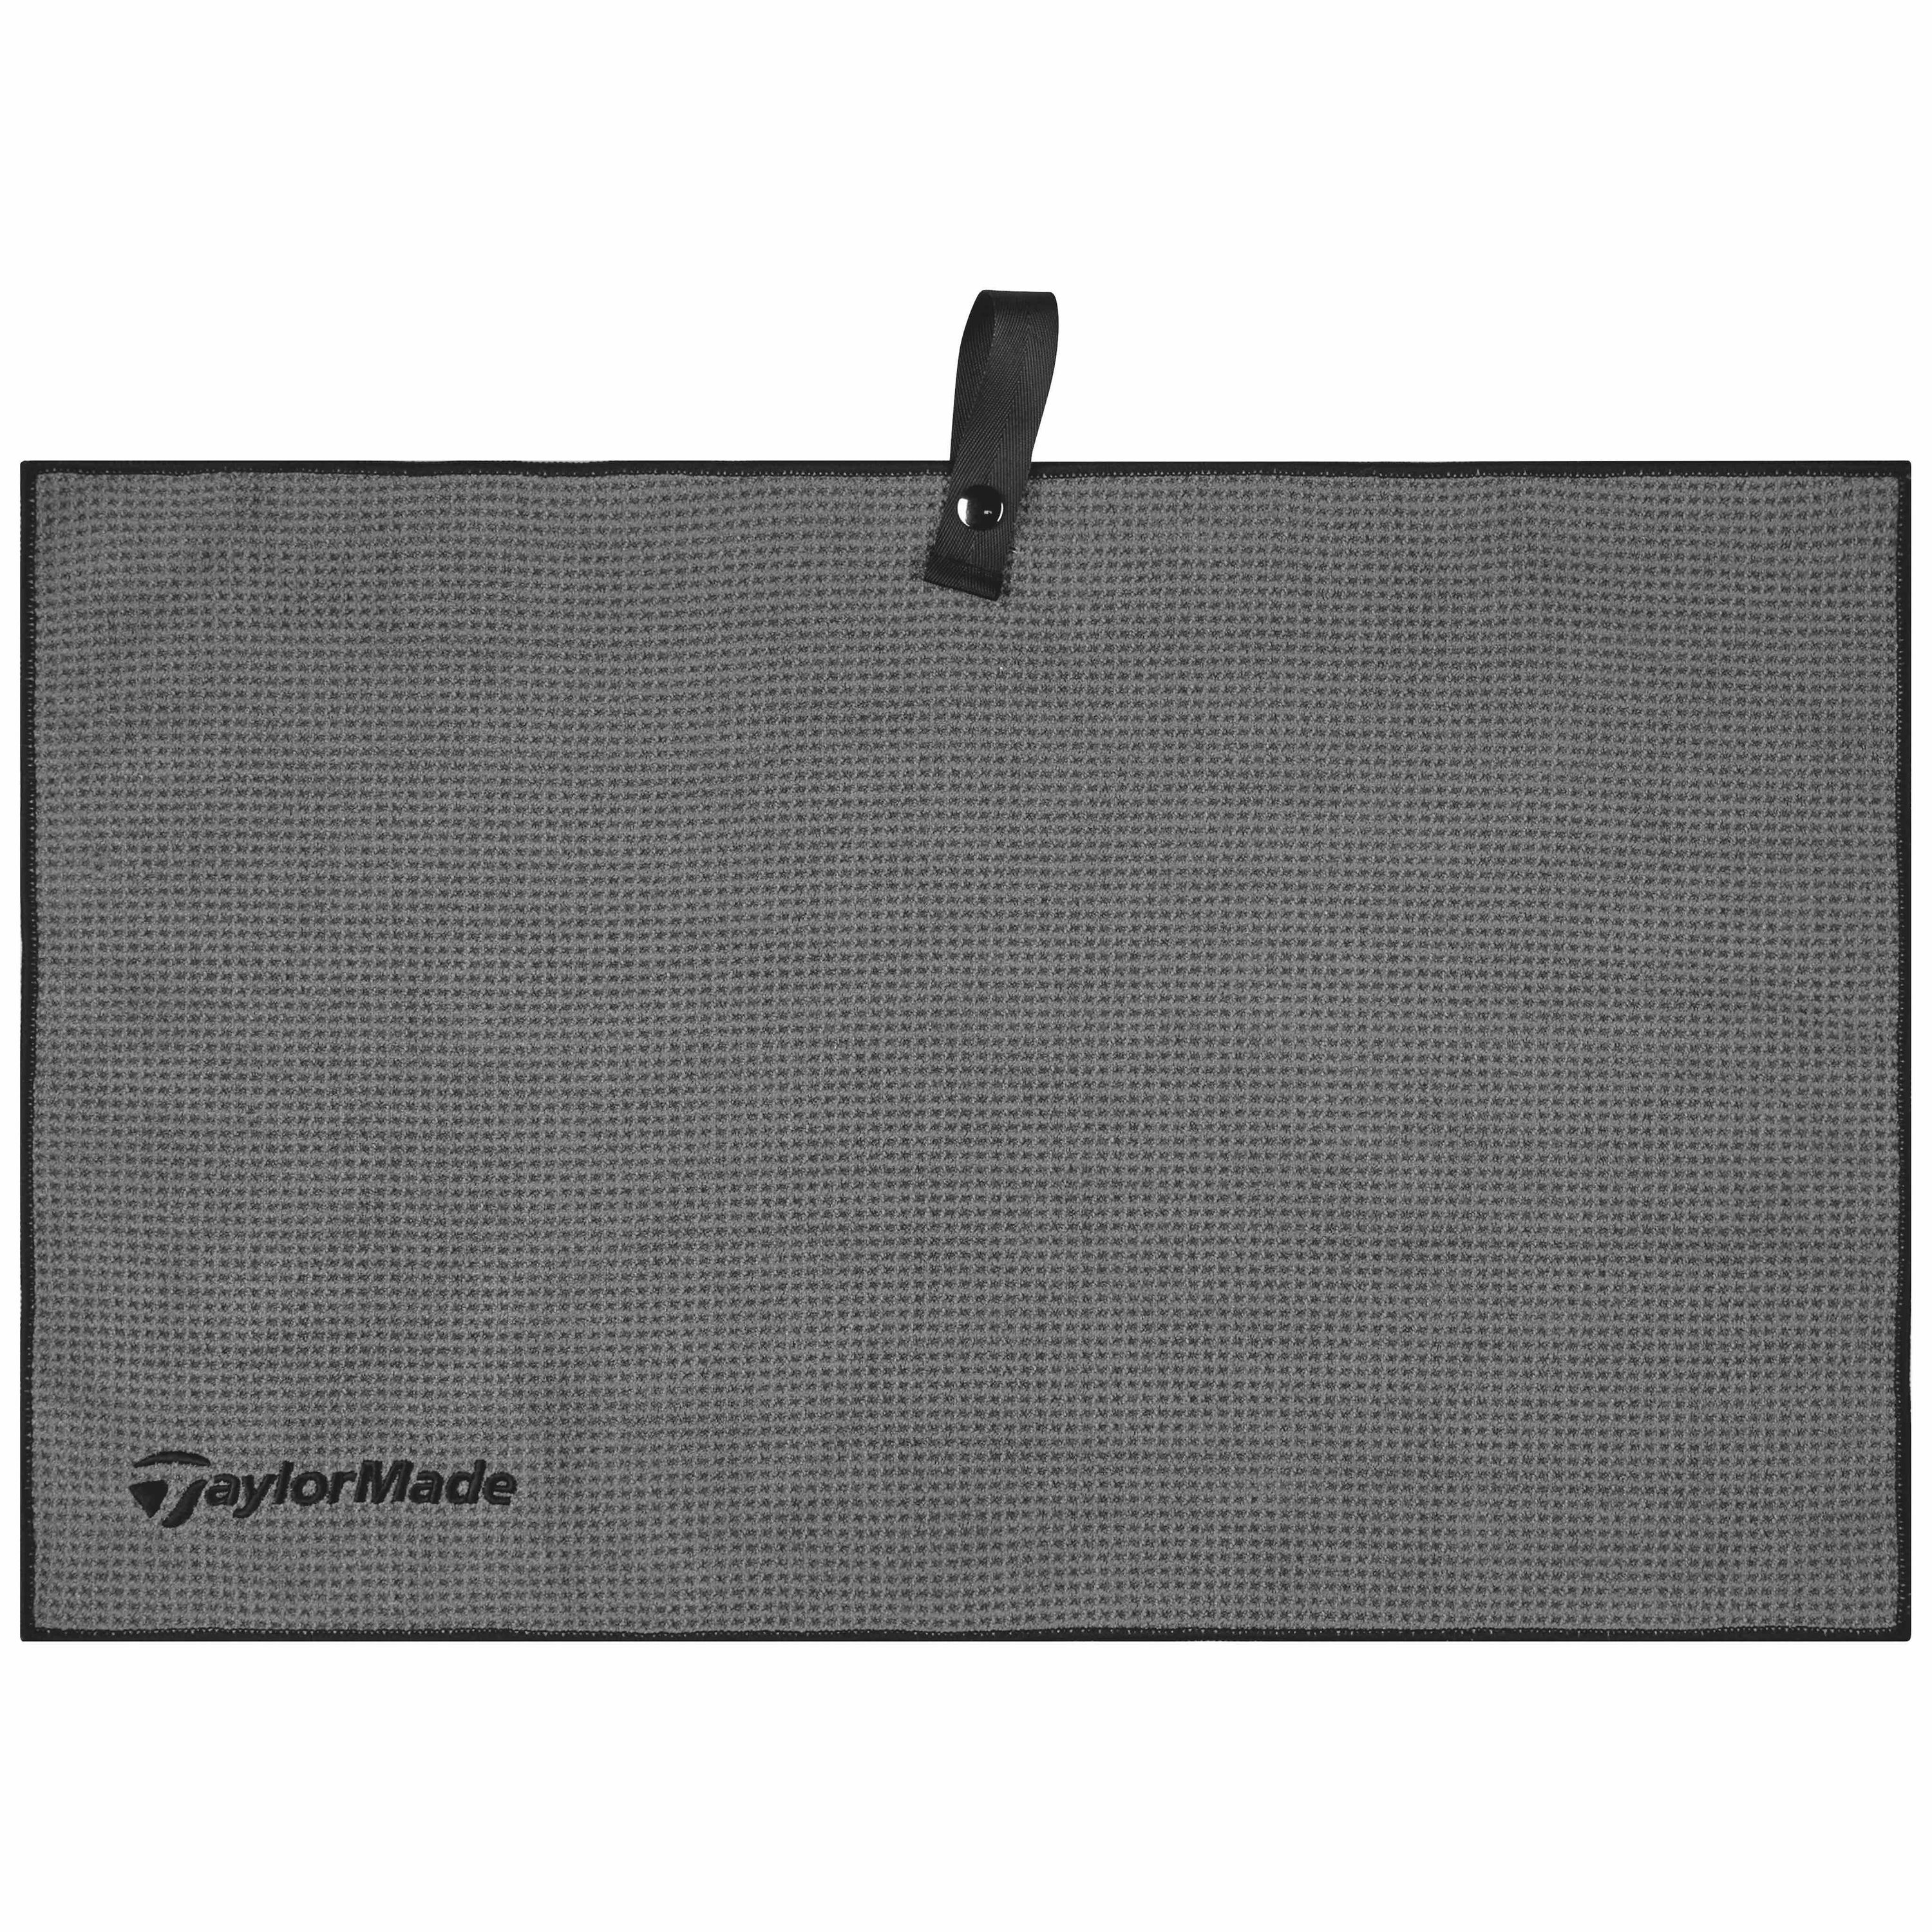 Taylormade Microfiber Bagtuch Grau